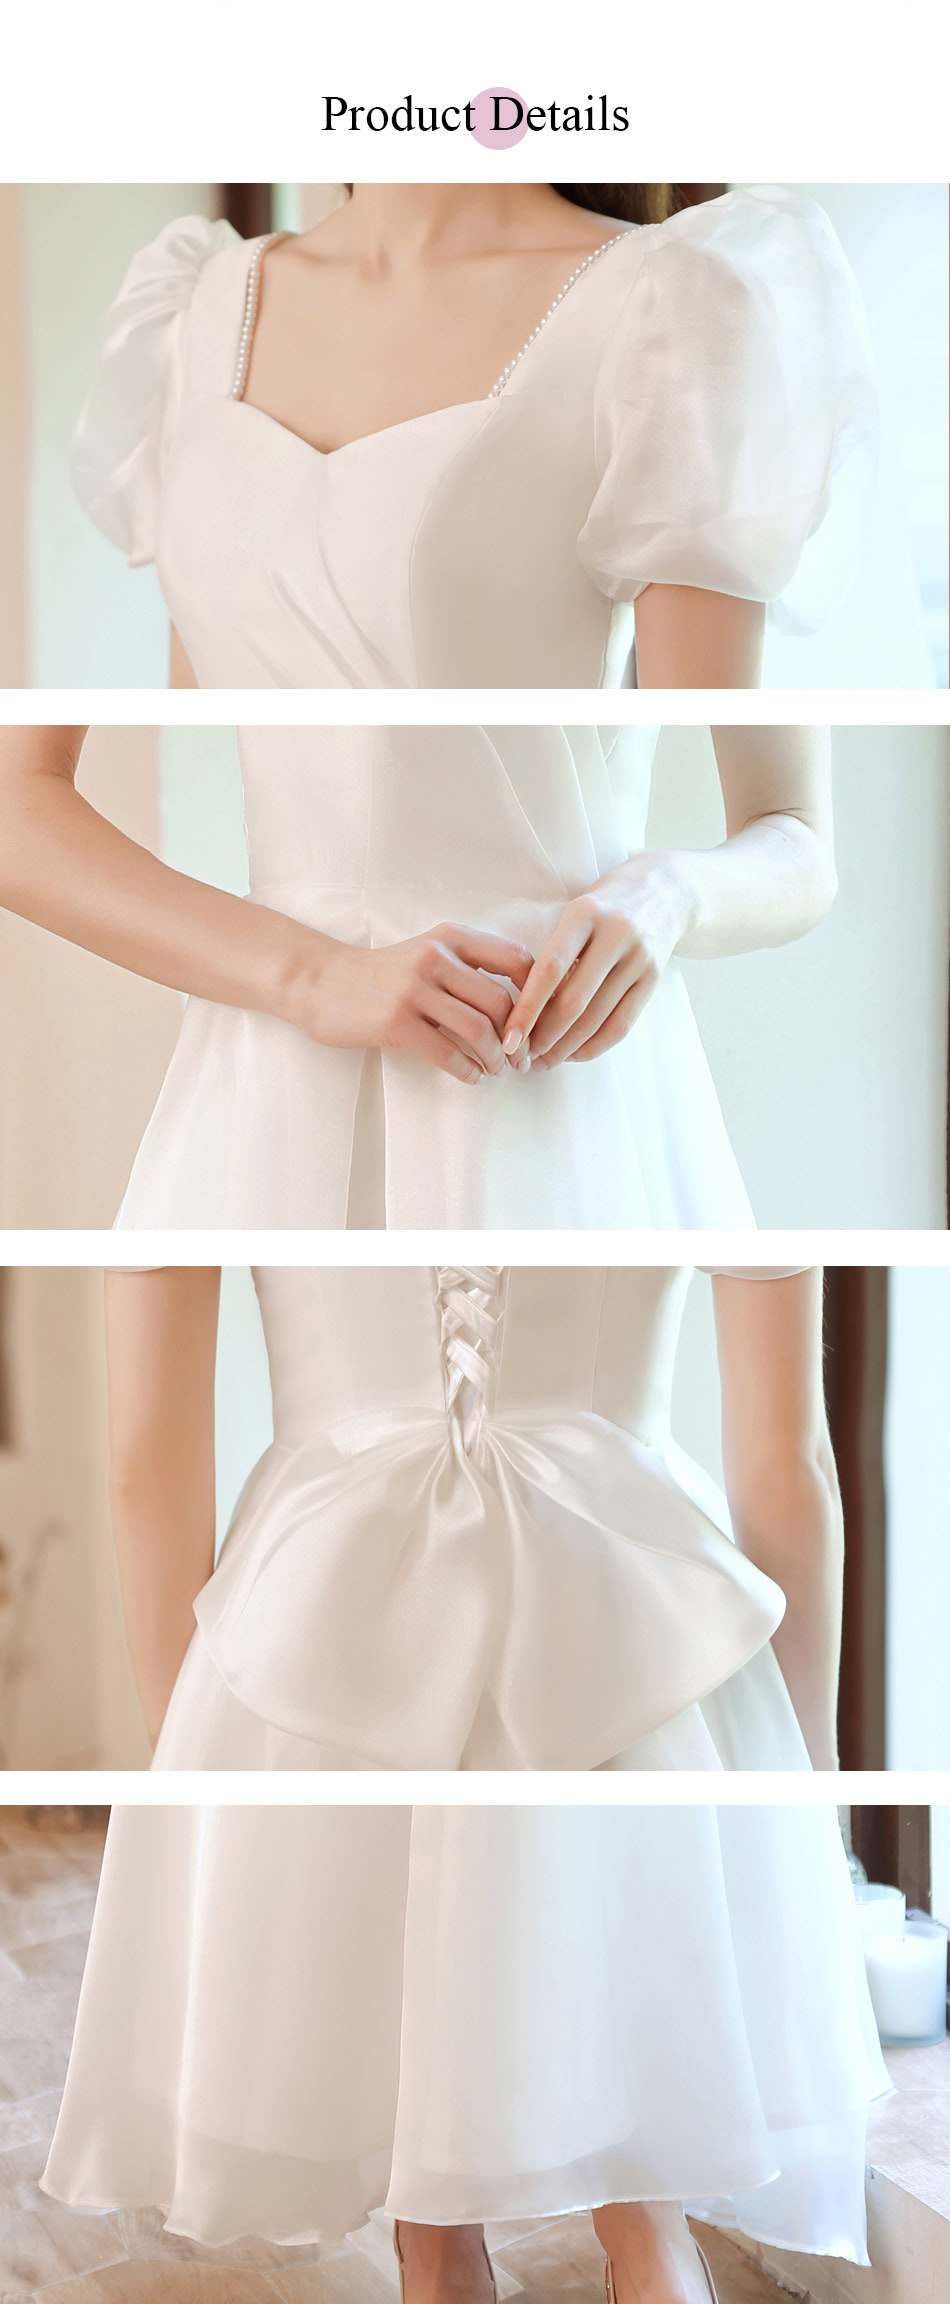 White-Short-Puff-Sleeve-Prom-Formal-Ball-Gown-Evening-Dress15.jpg